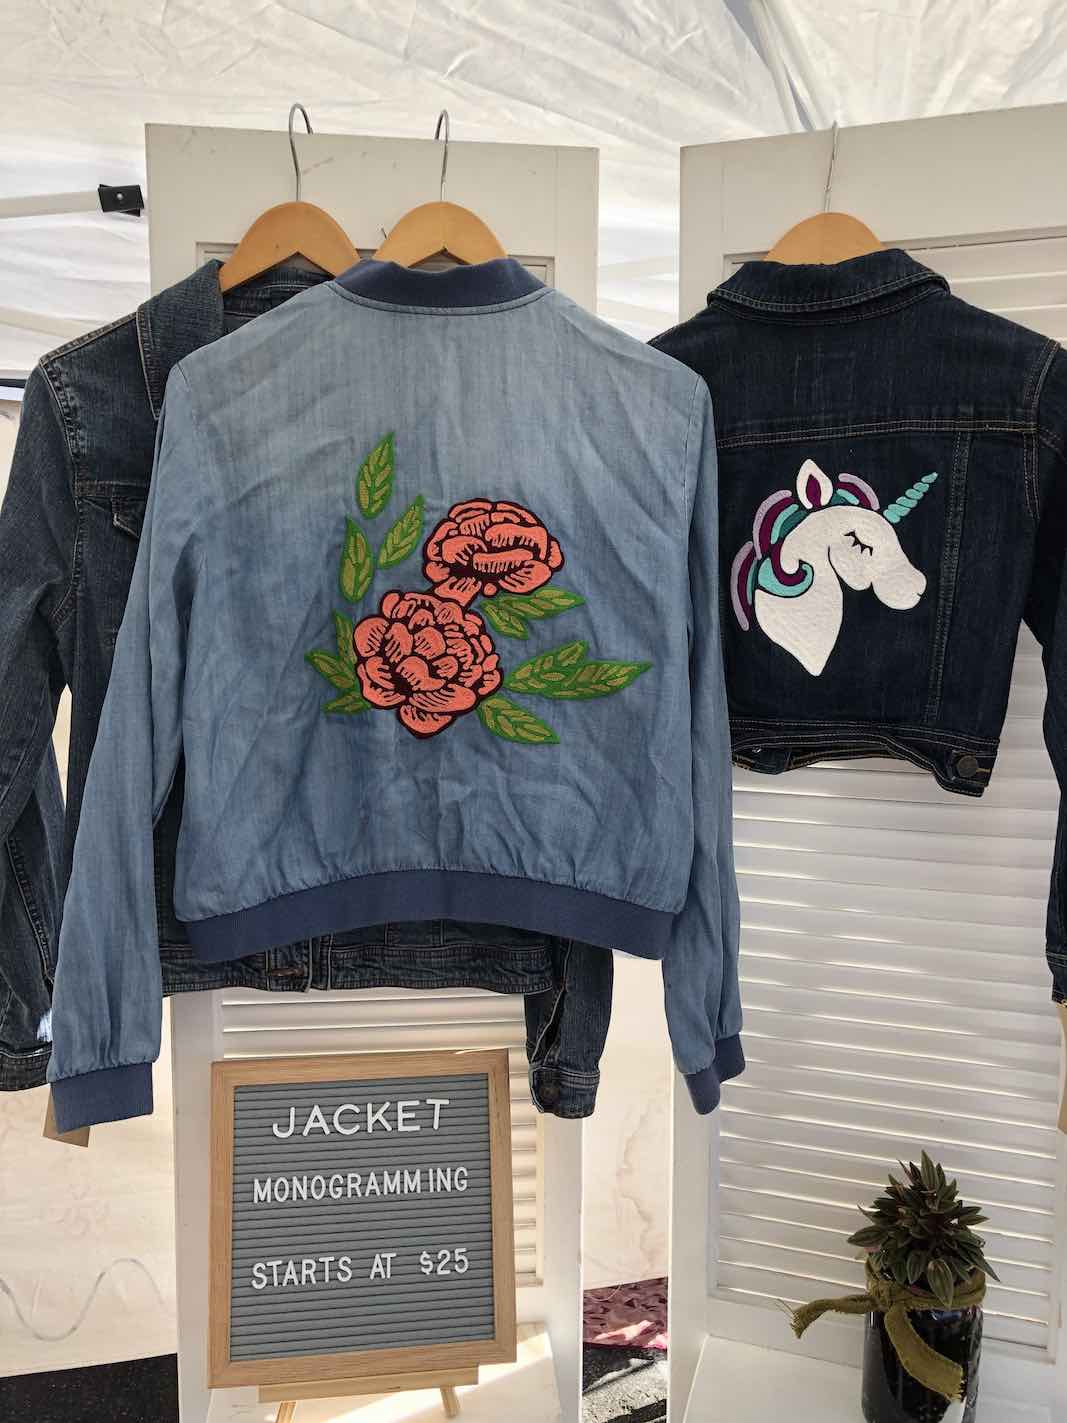 I Heart Costa Mesa: Chain-stitched denim jackets by Sarah Jane Goods in Westside Costa Mesa, Orange County, California. (photo: Samantha Chagollan)